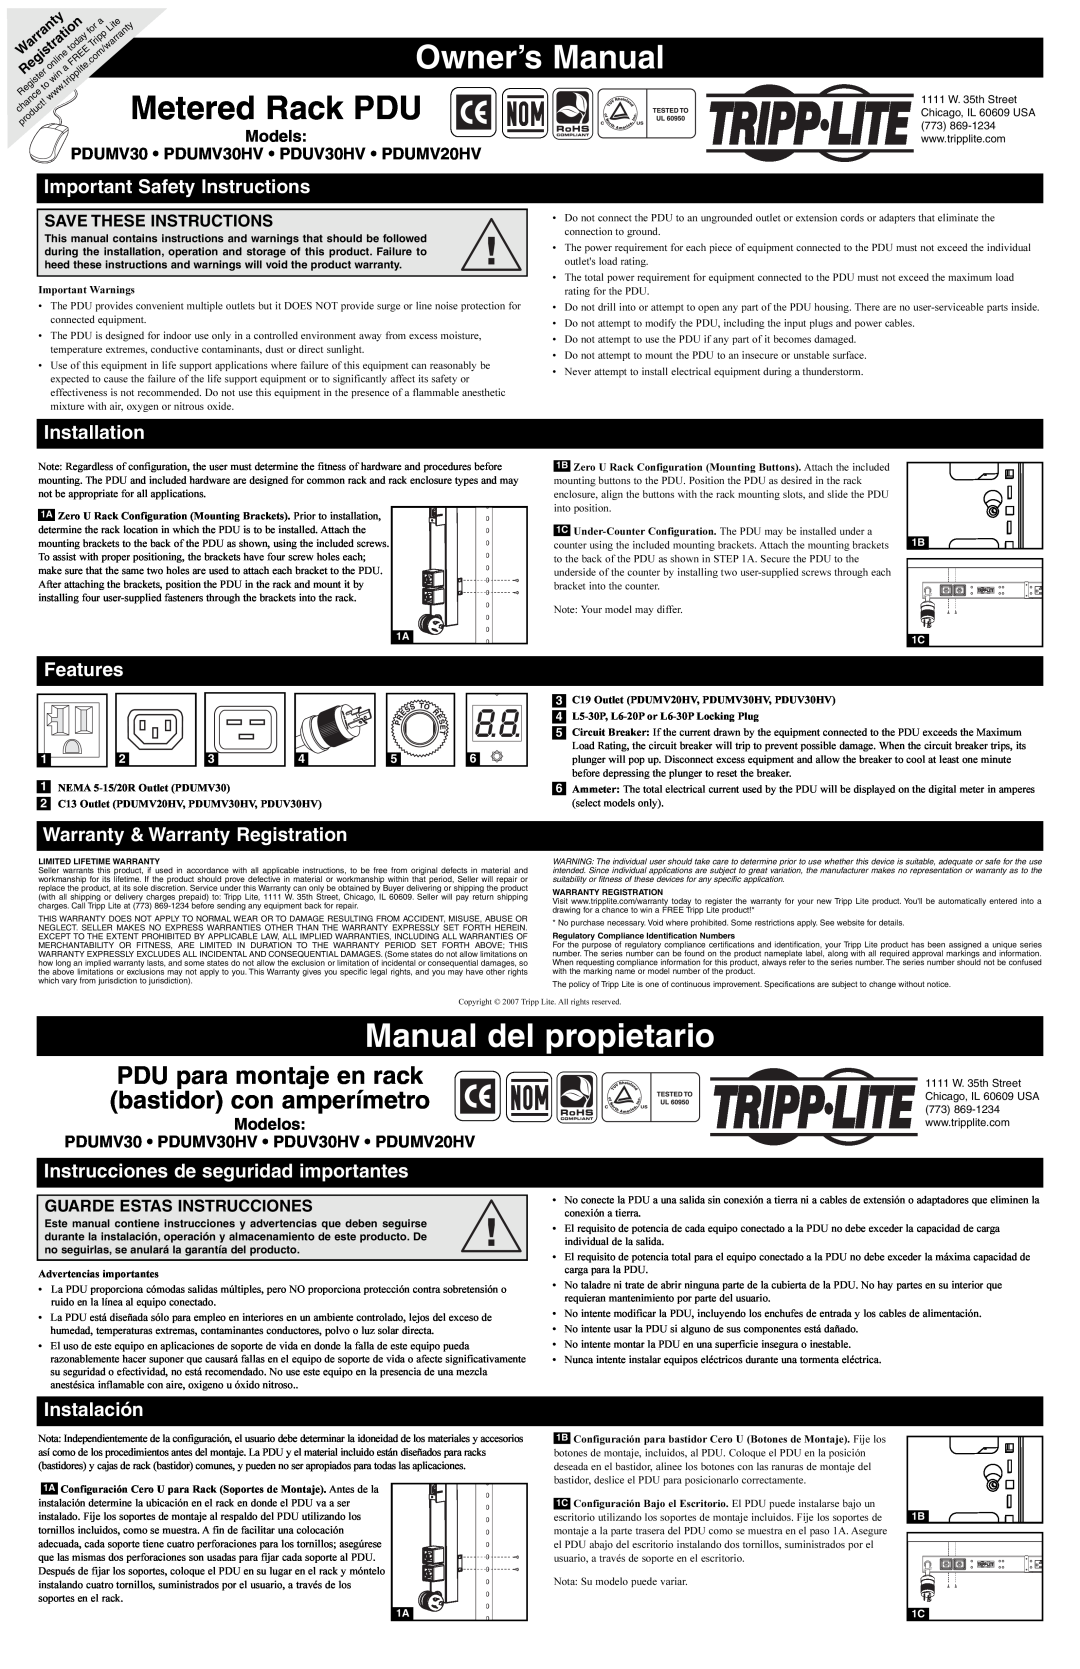 Tripp Lite PDUMV20HV owner manual Owner’s Manual, Manual del propietario, Important Safety Instructions, Installation 